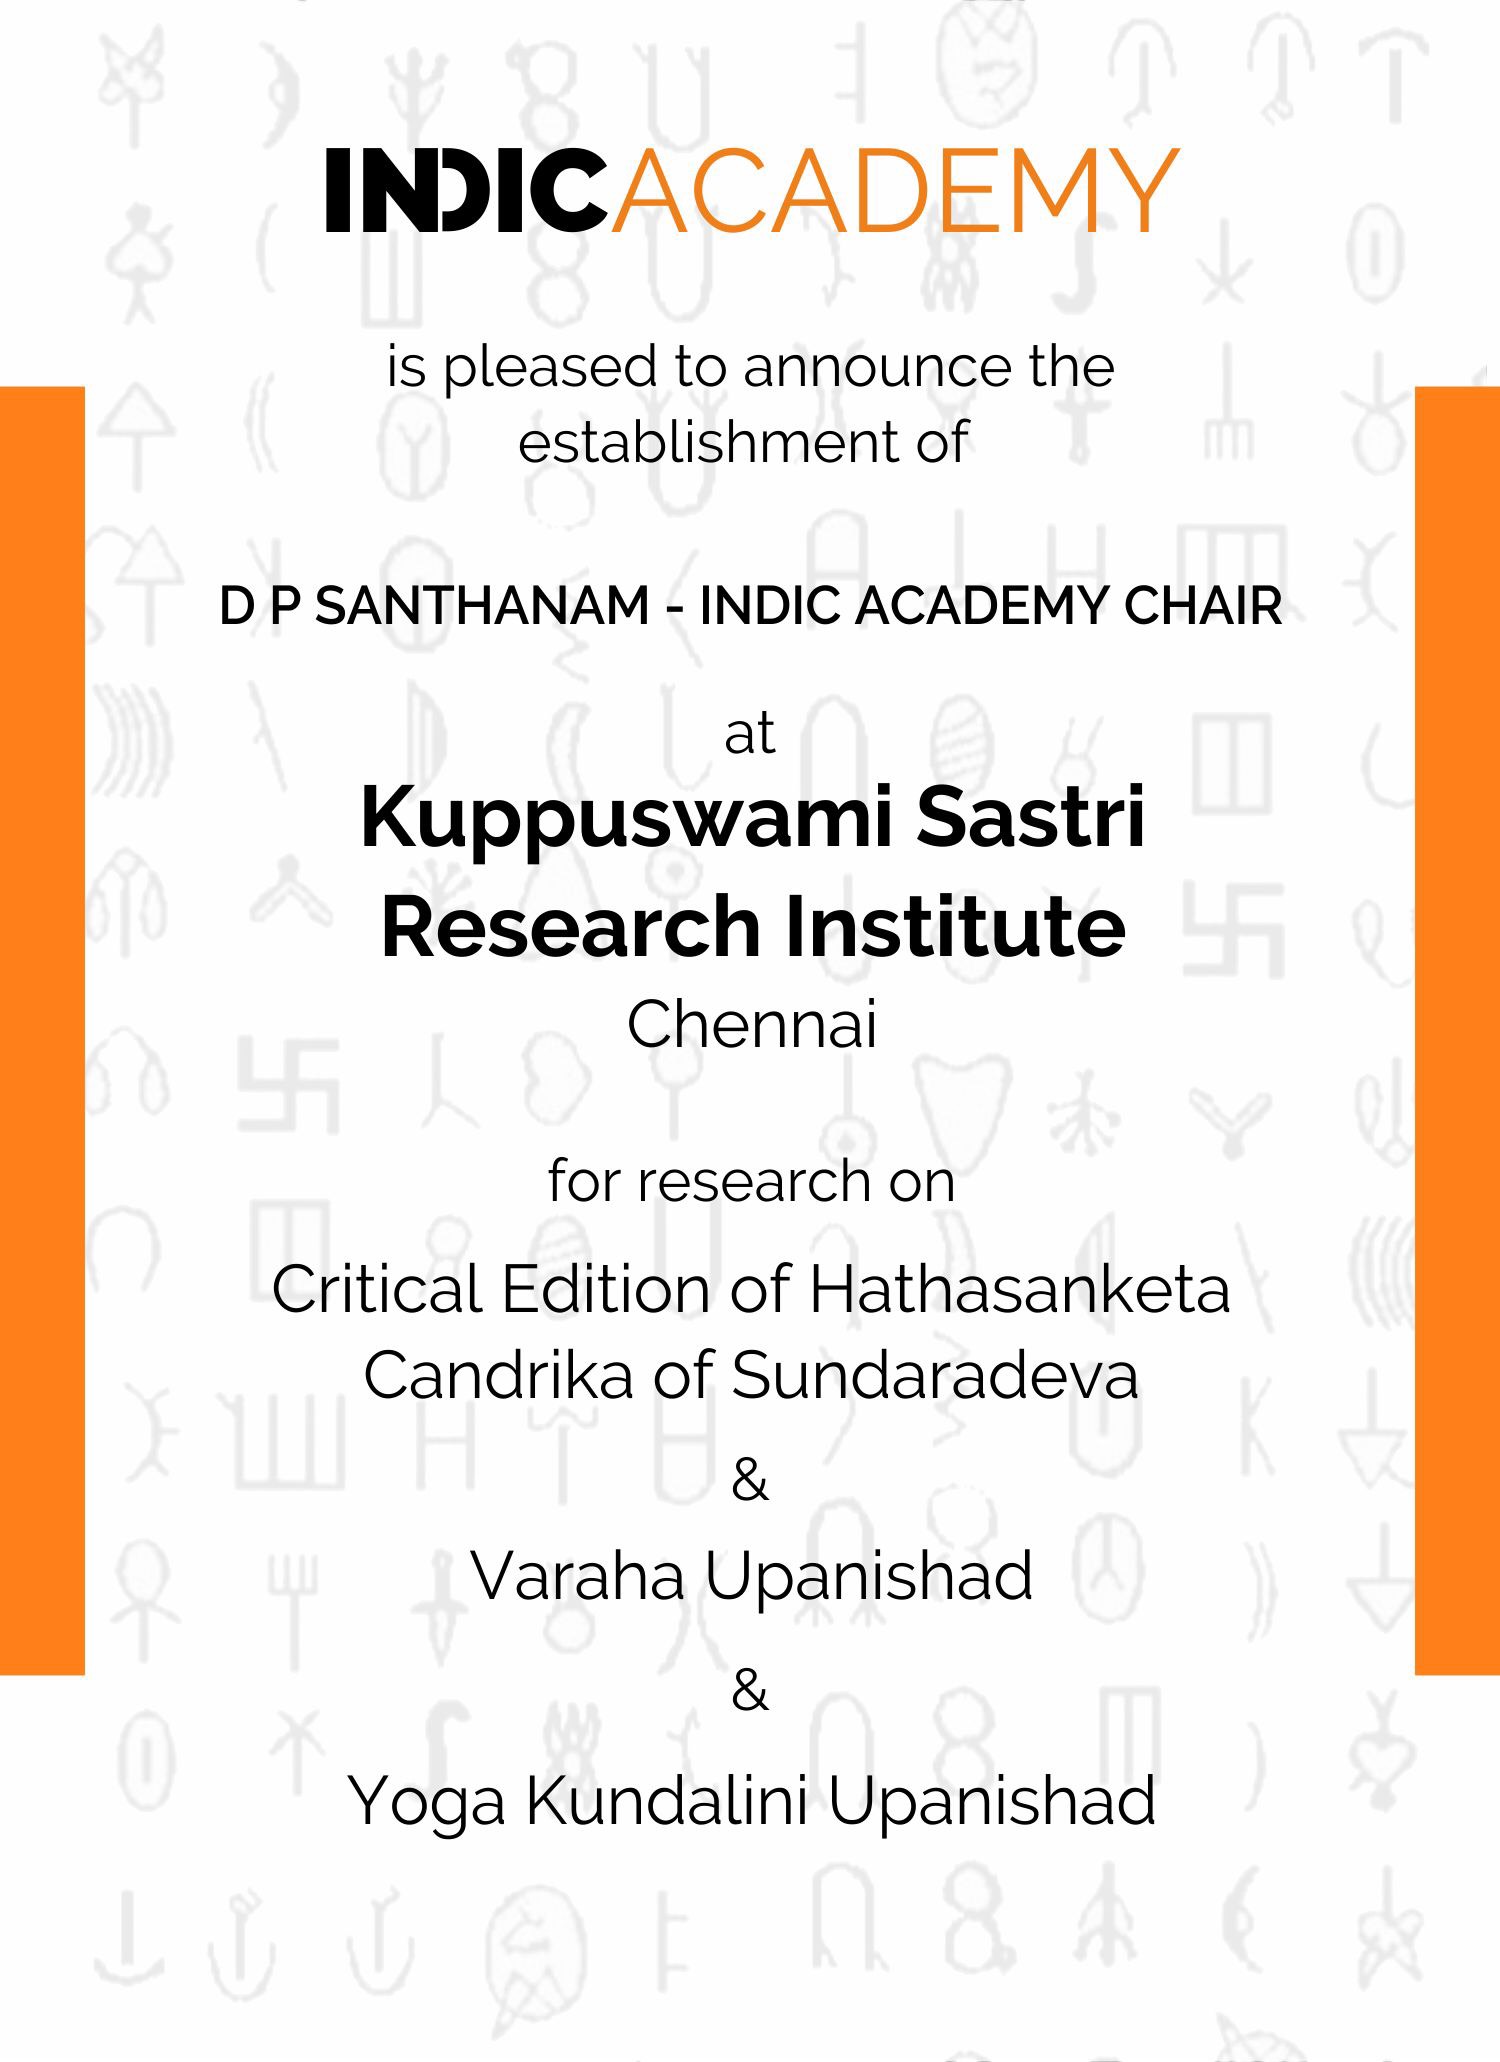 DP Santhanam- Indic Academy Chair at KSRI Chennai